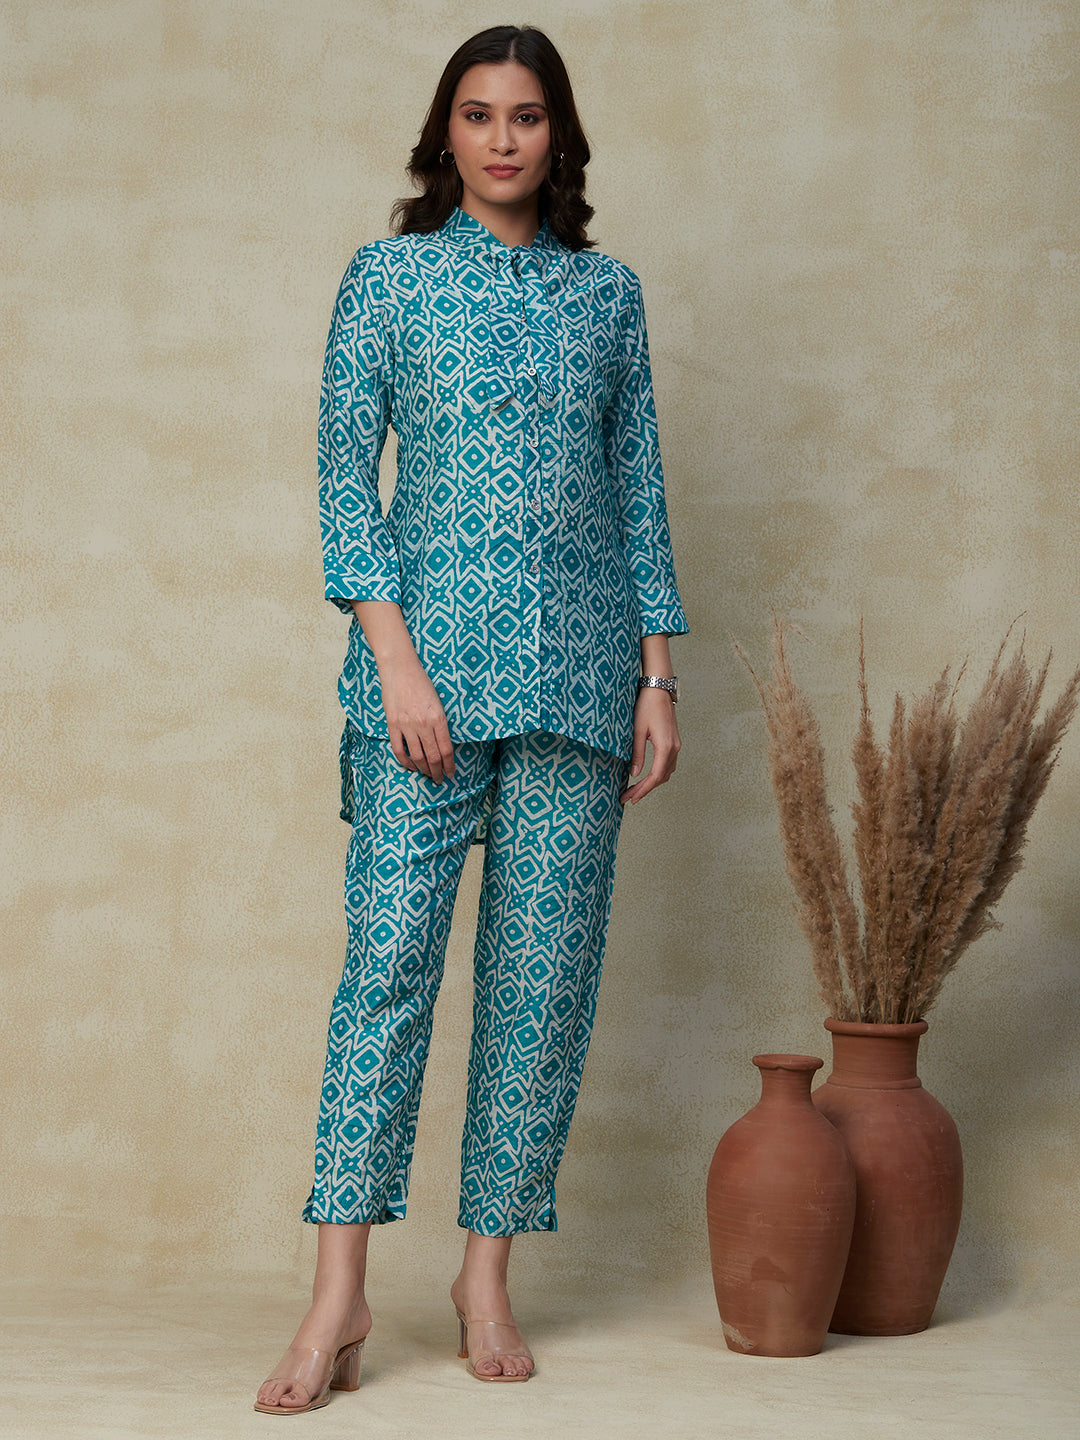 Abstract Batik Printed Asymmetric High-Low Hem Shirt with Pants Co-ord Set - Green